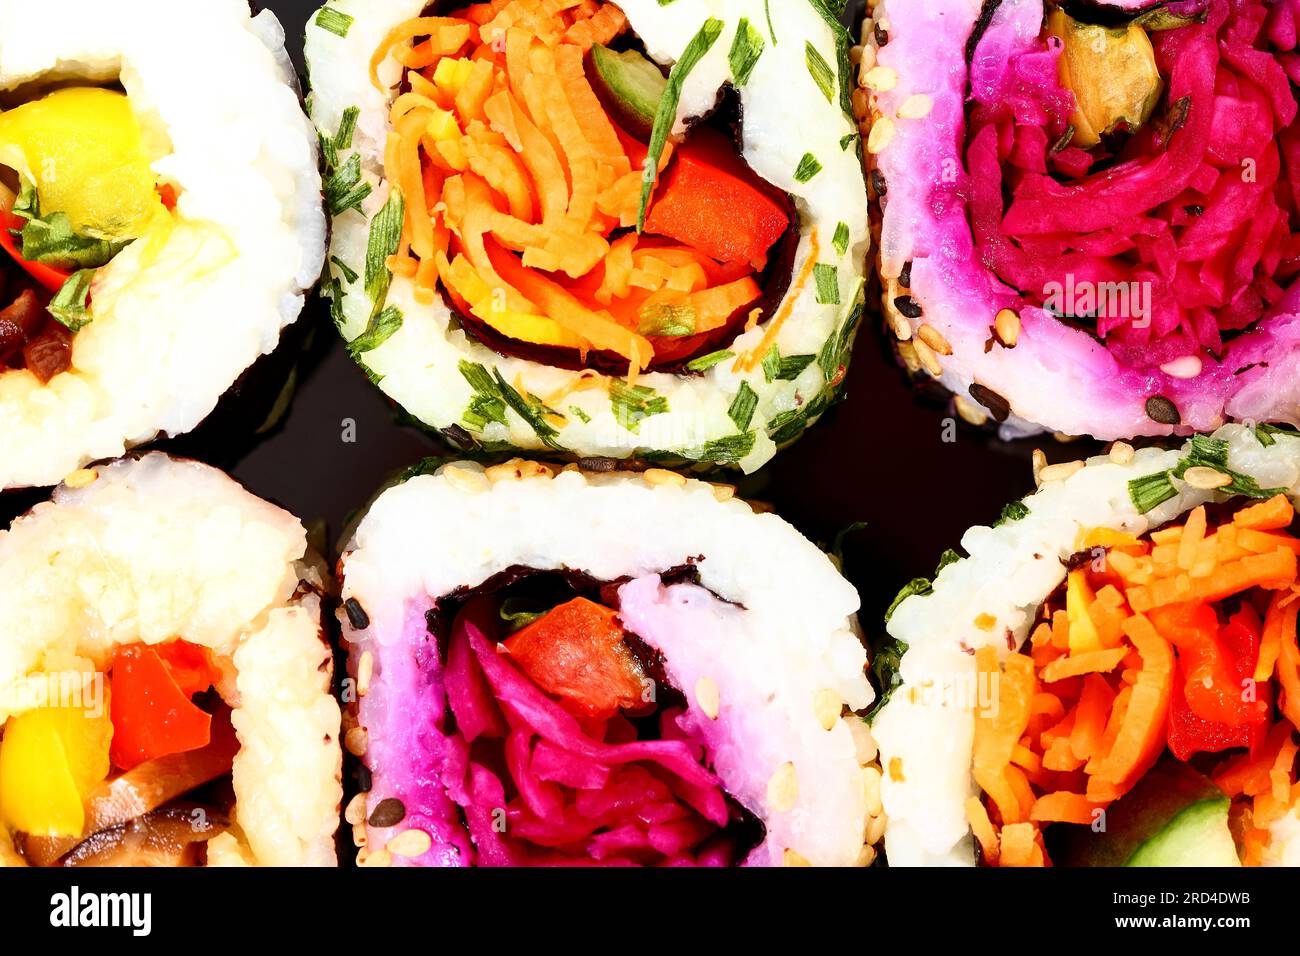 Close up view of vegan sushi rolls Stock Photo